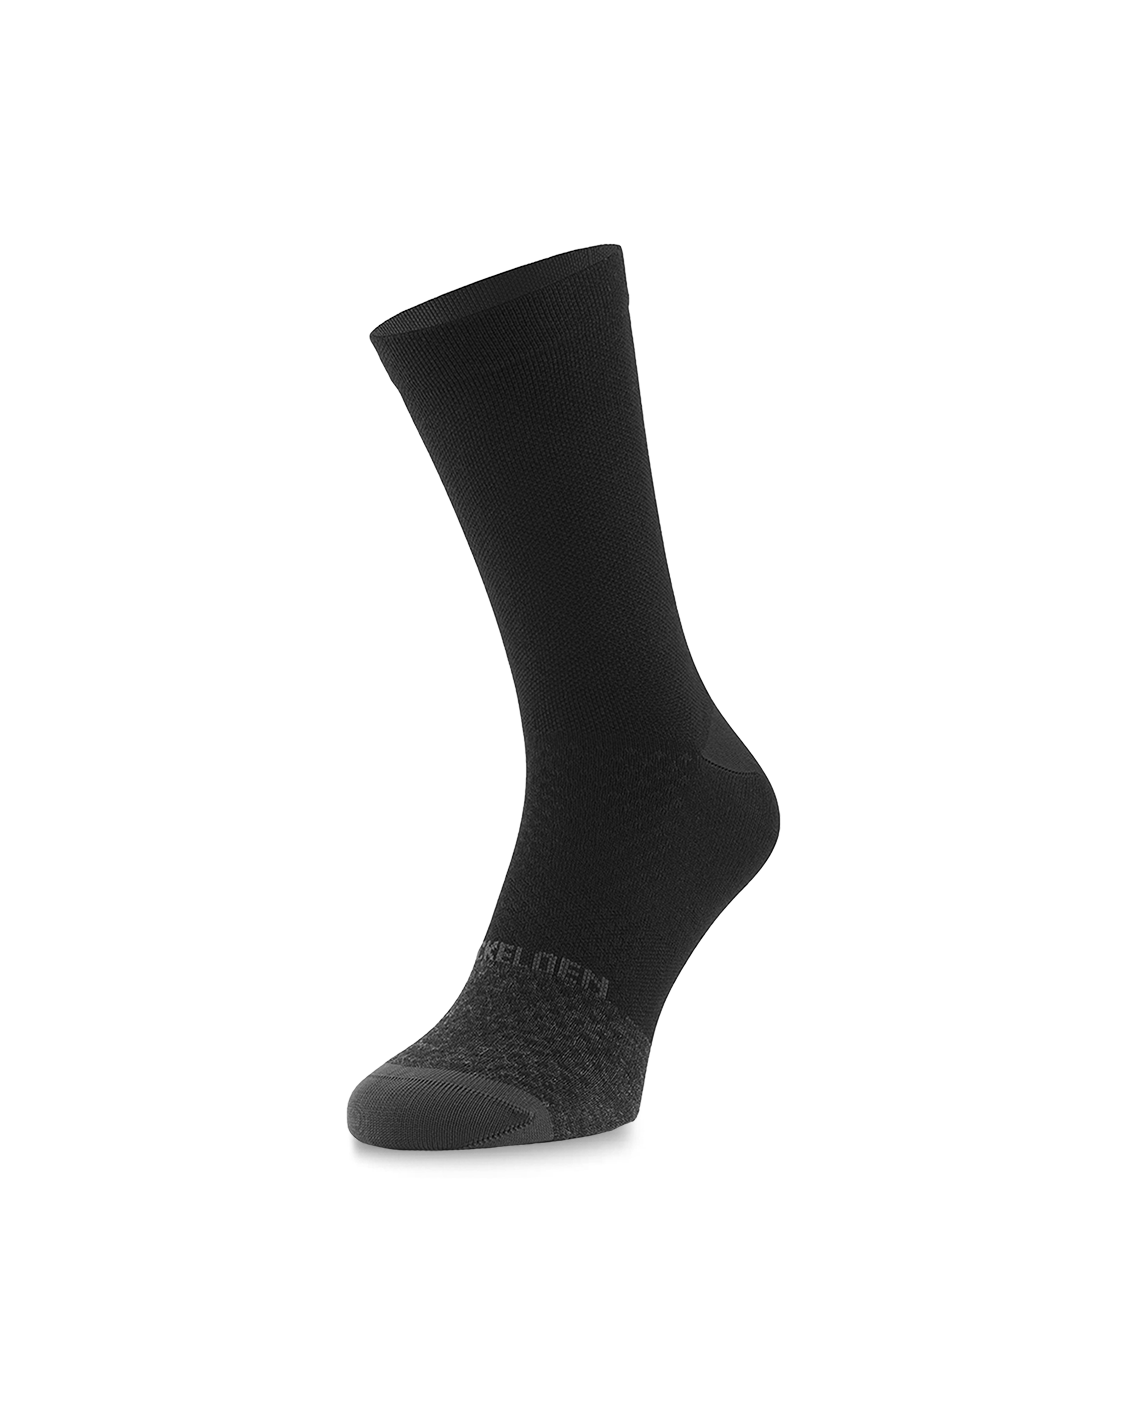 sockeloen-lsrf-merino-cycling-socks